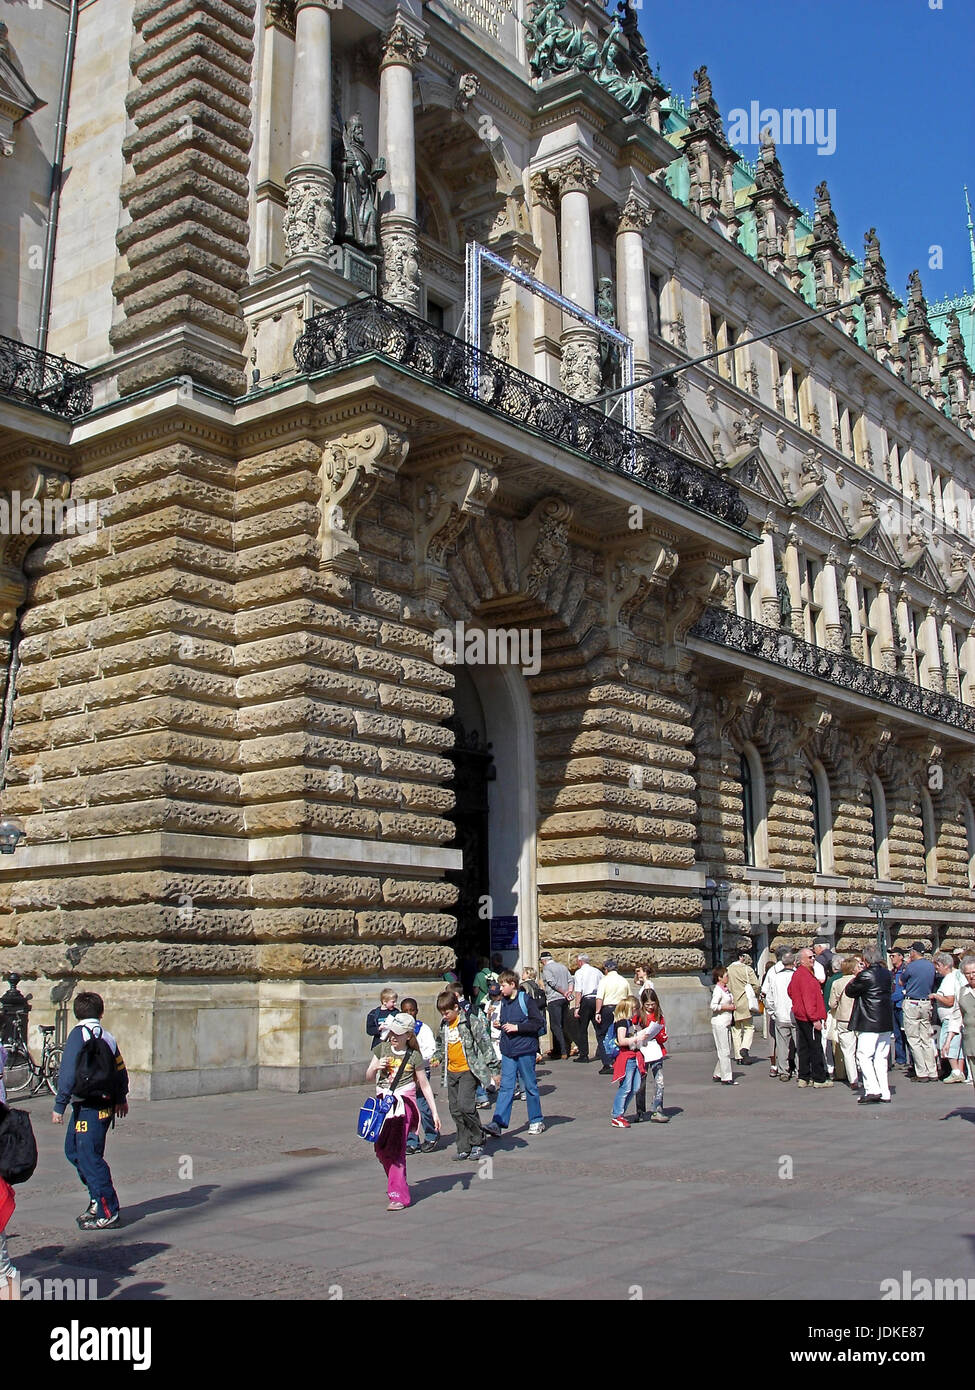 Germania, Amburgo, Municipio di mercato turistico, prima di city hall, Deutschland, Rathausmarkt, vor Touristen Rathaus Foto Stock